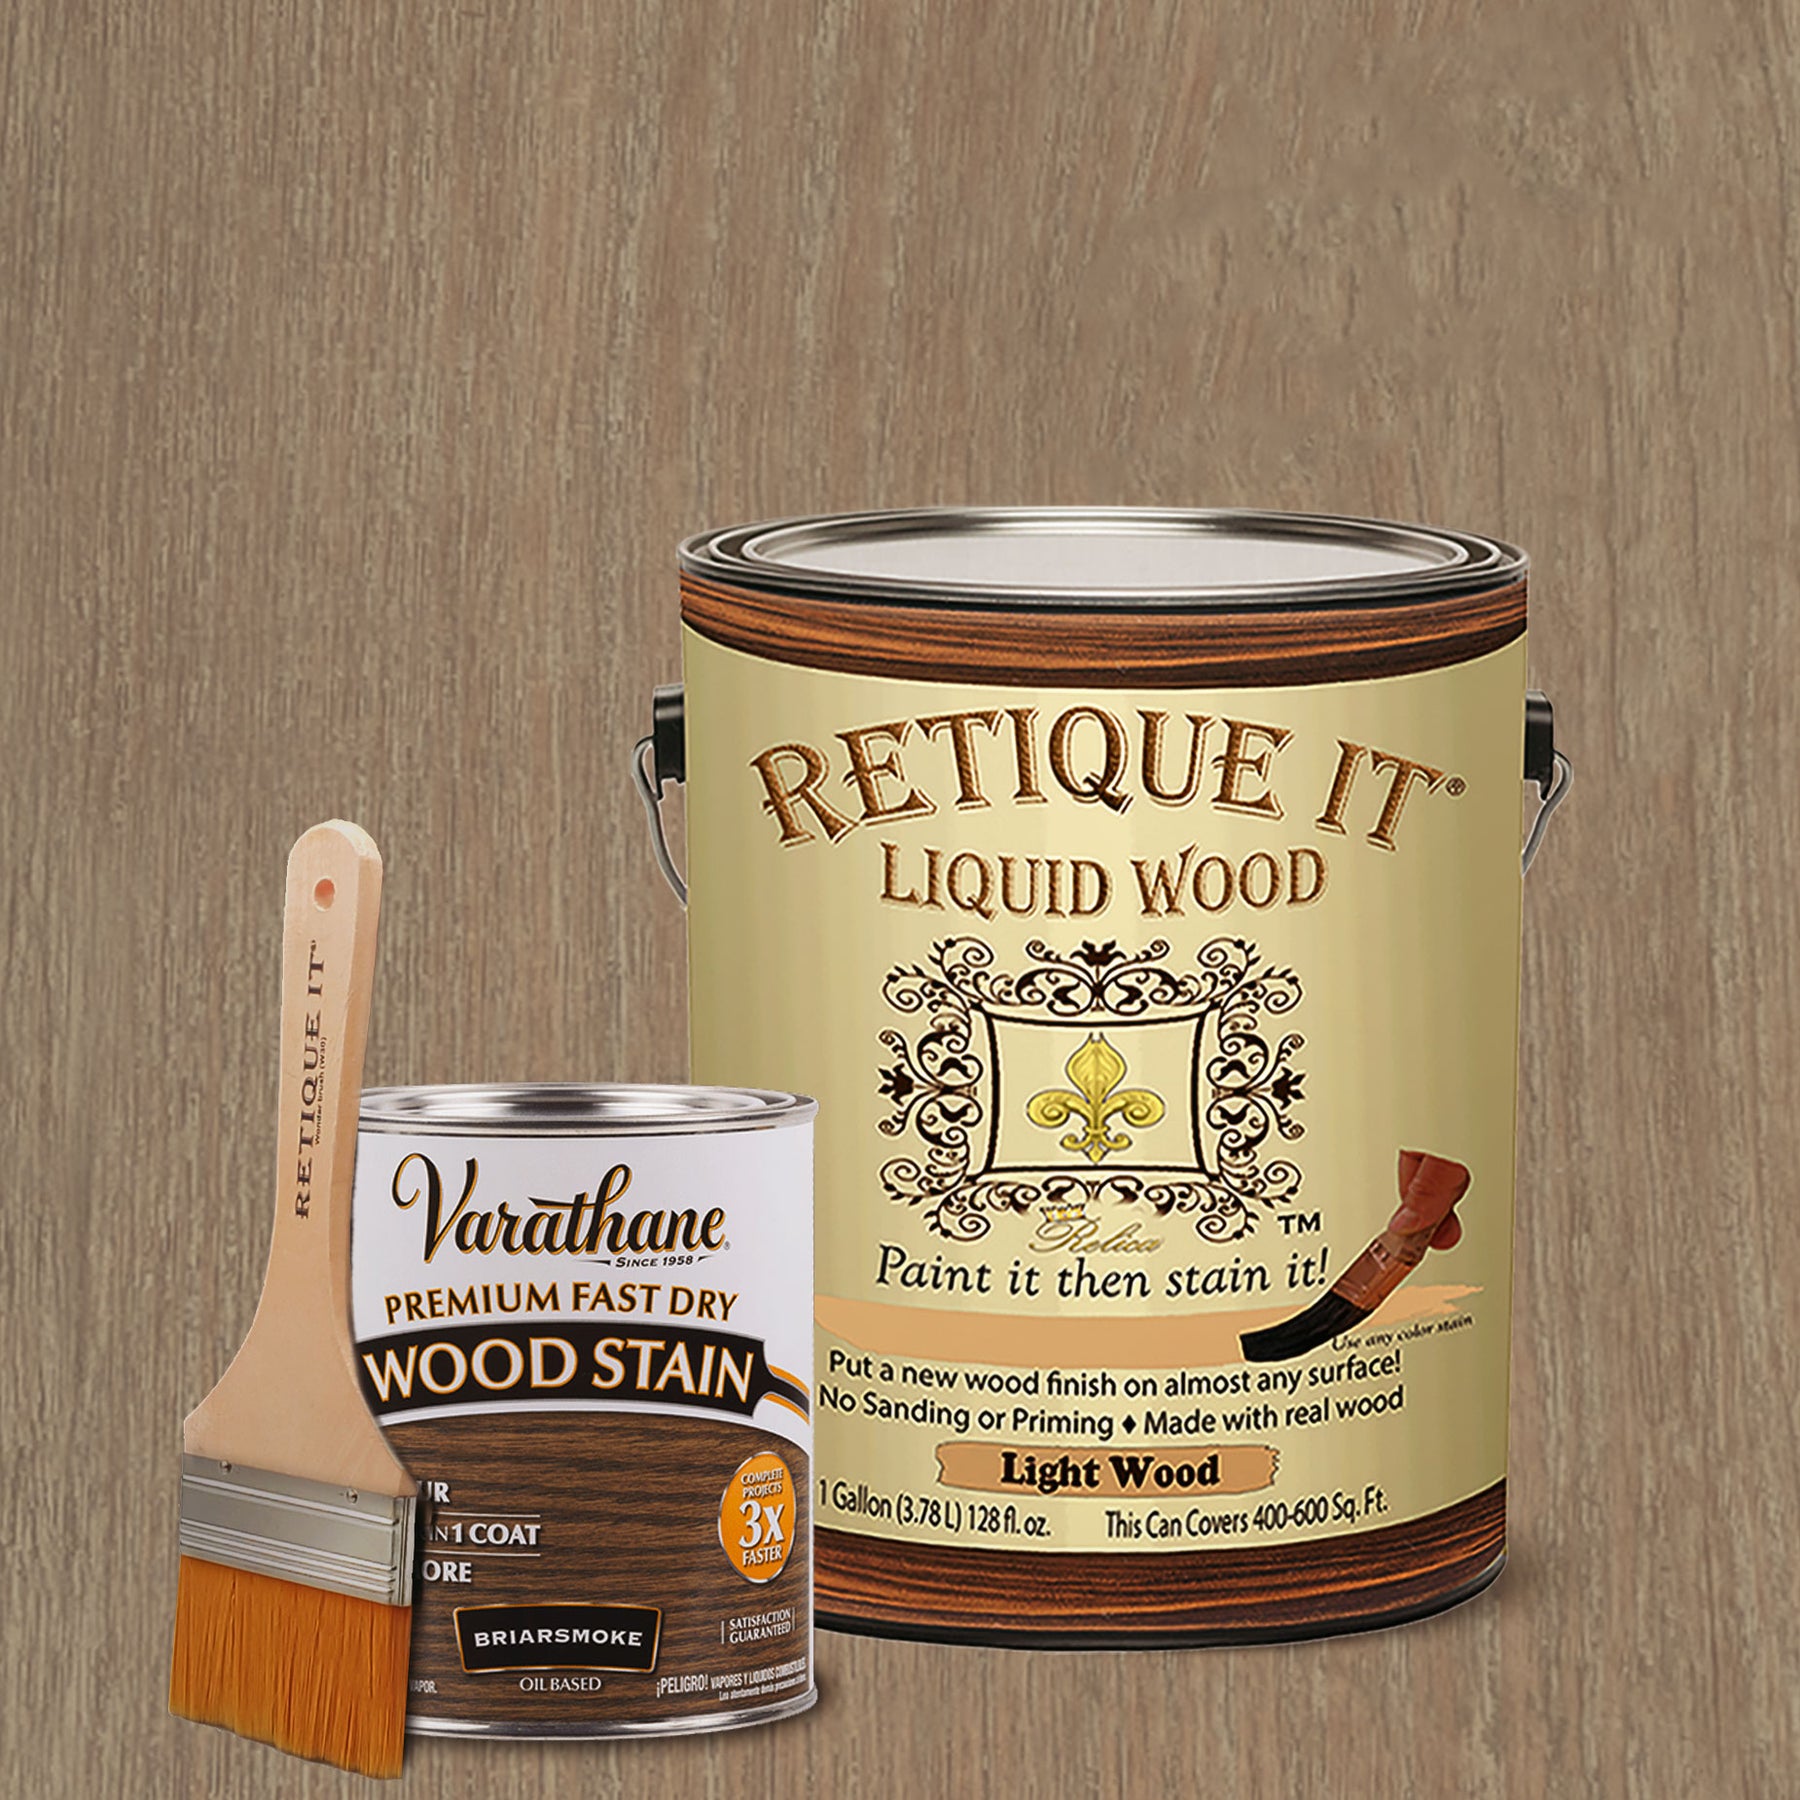 Liquid Wood Kit - Briarsmoke Oil-based Stain